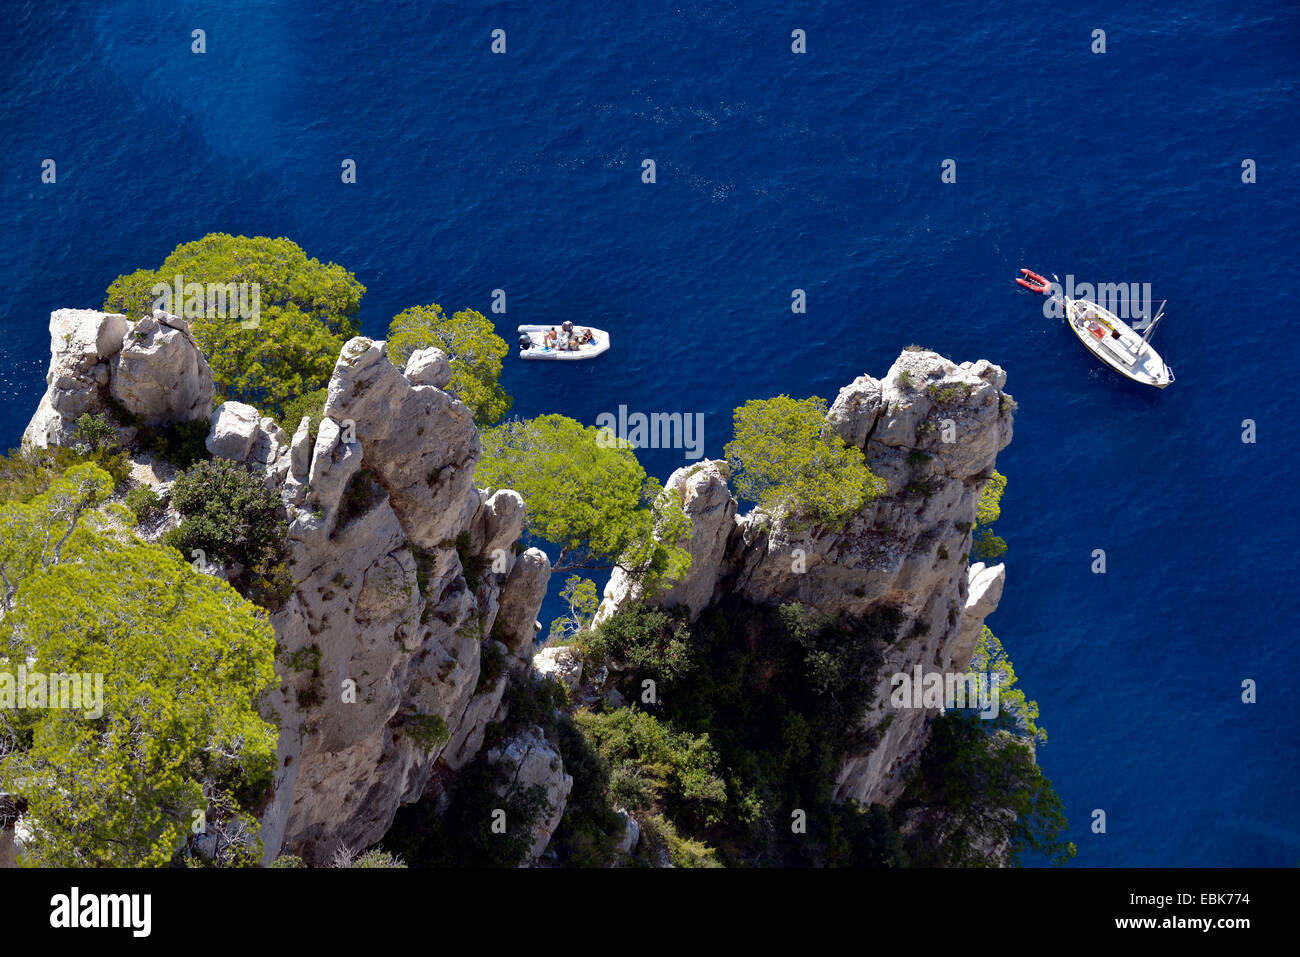 boats at rocky coast Calanque, France, Calanques National Park Stock Photo